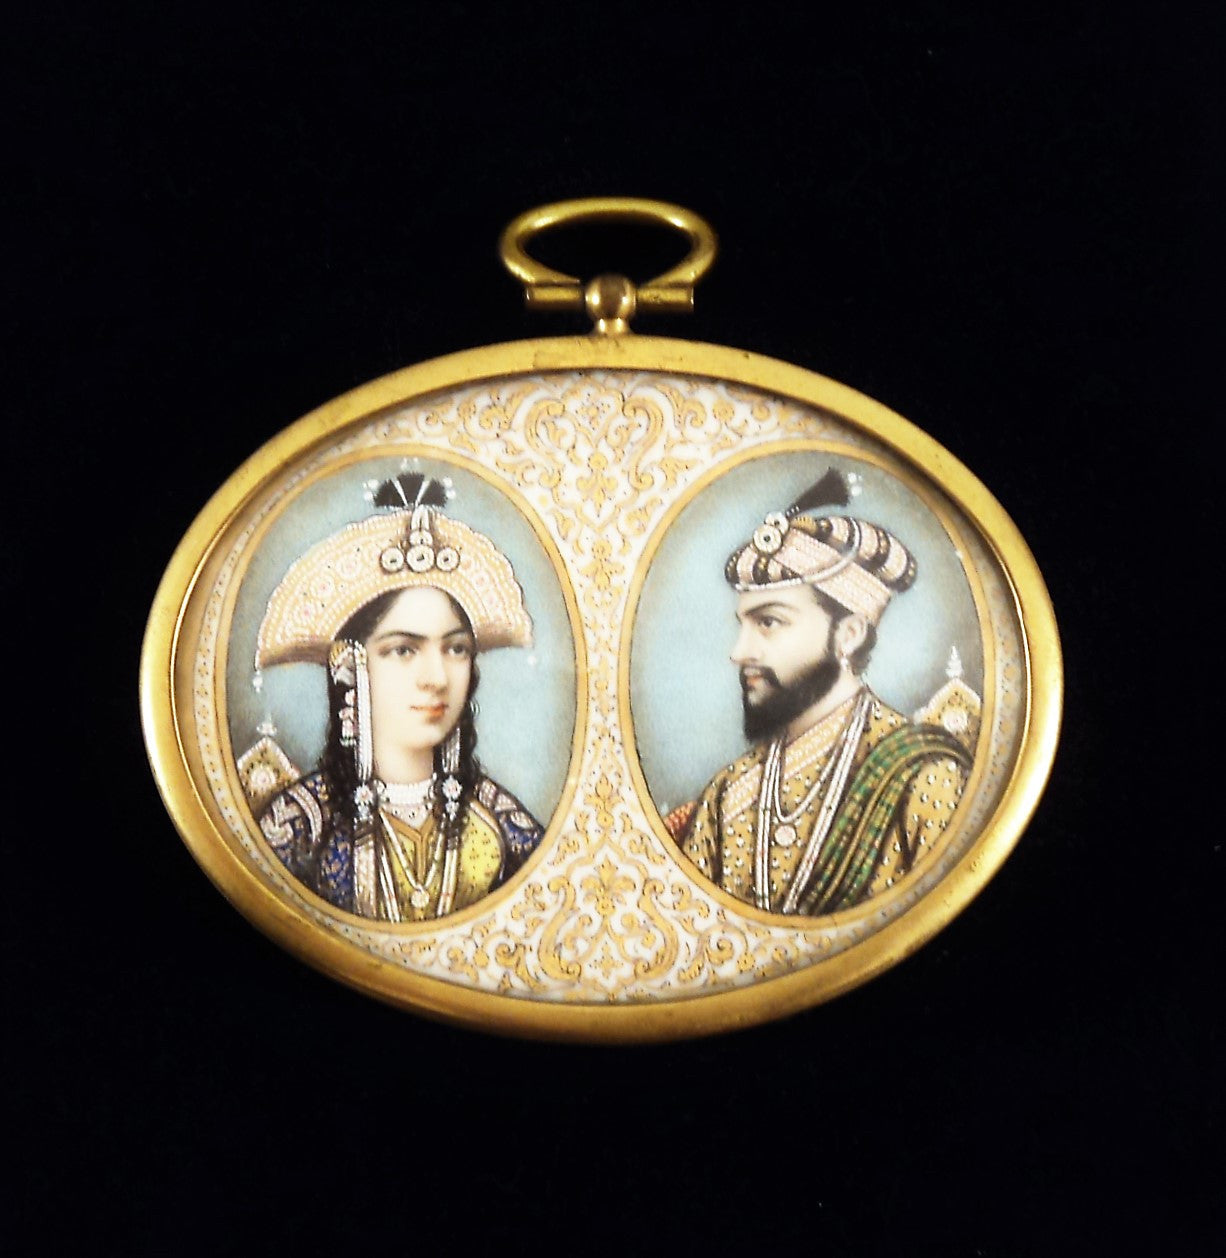 19th C. Shah Jahan and Mumtaz Mahal Miniature Portrait